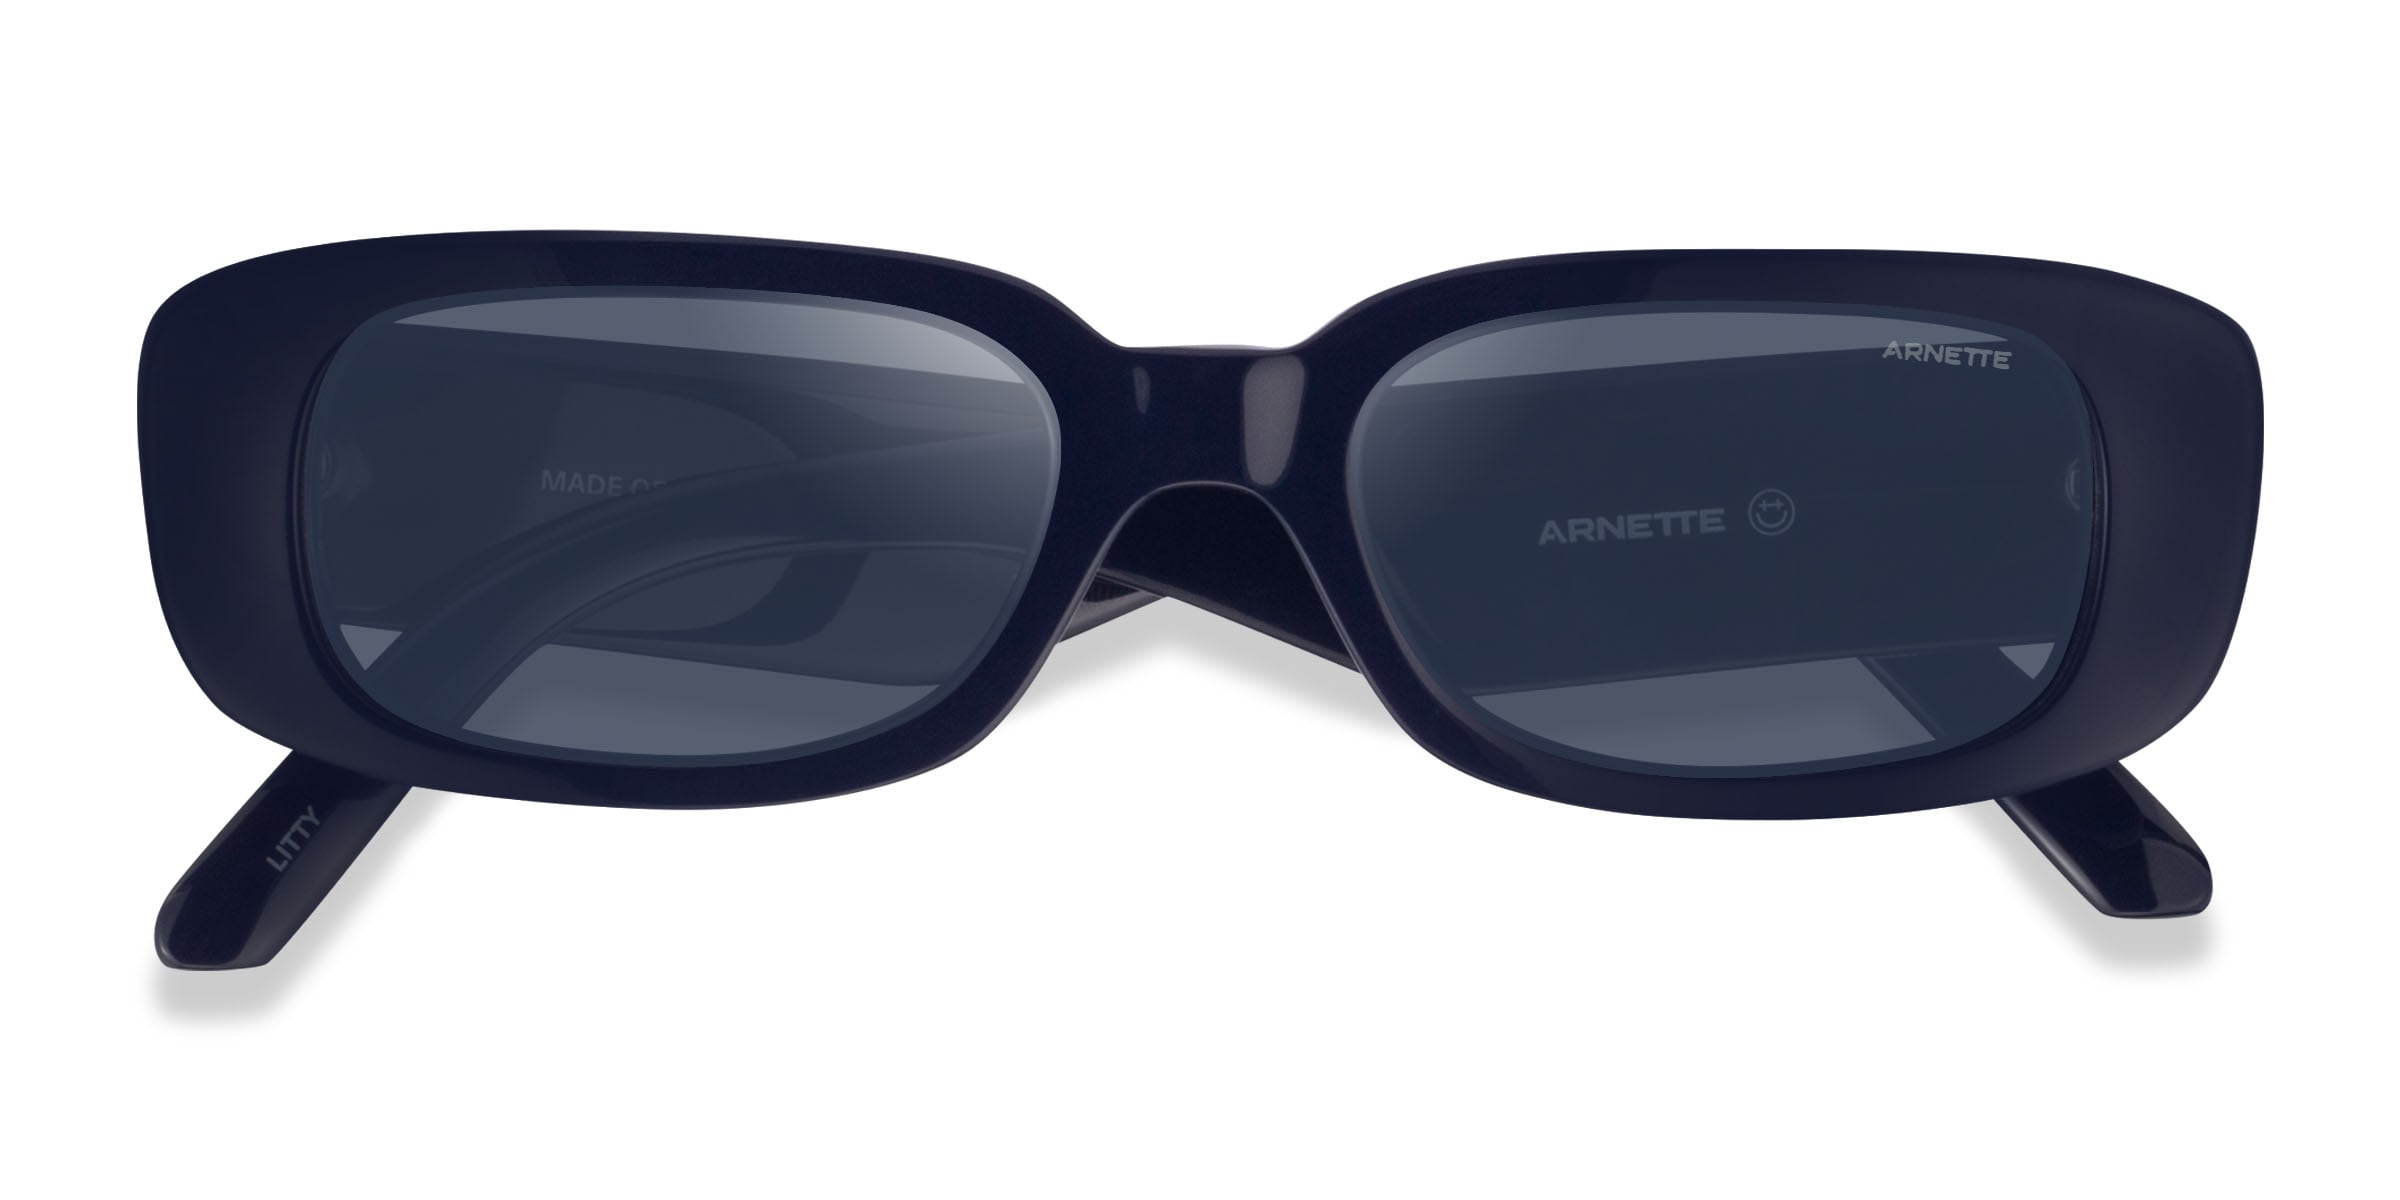 ARNETTE Sunglasses Styles | Eyebuydirect Canada